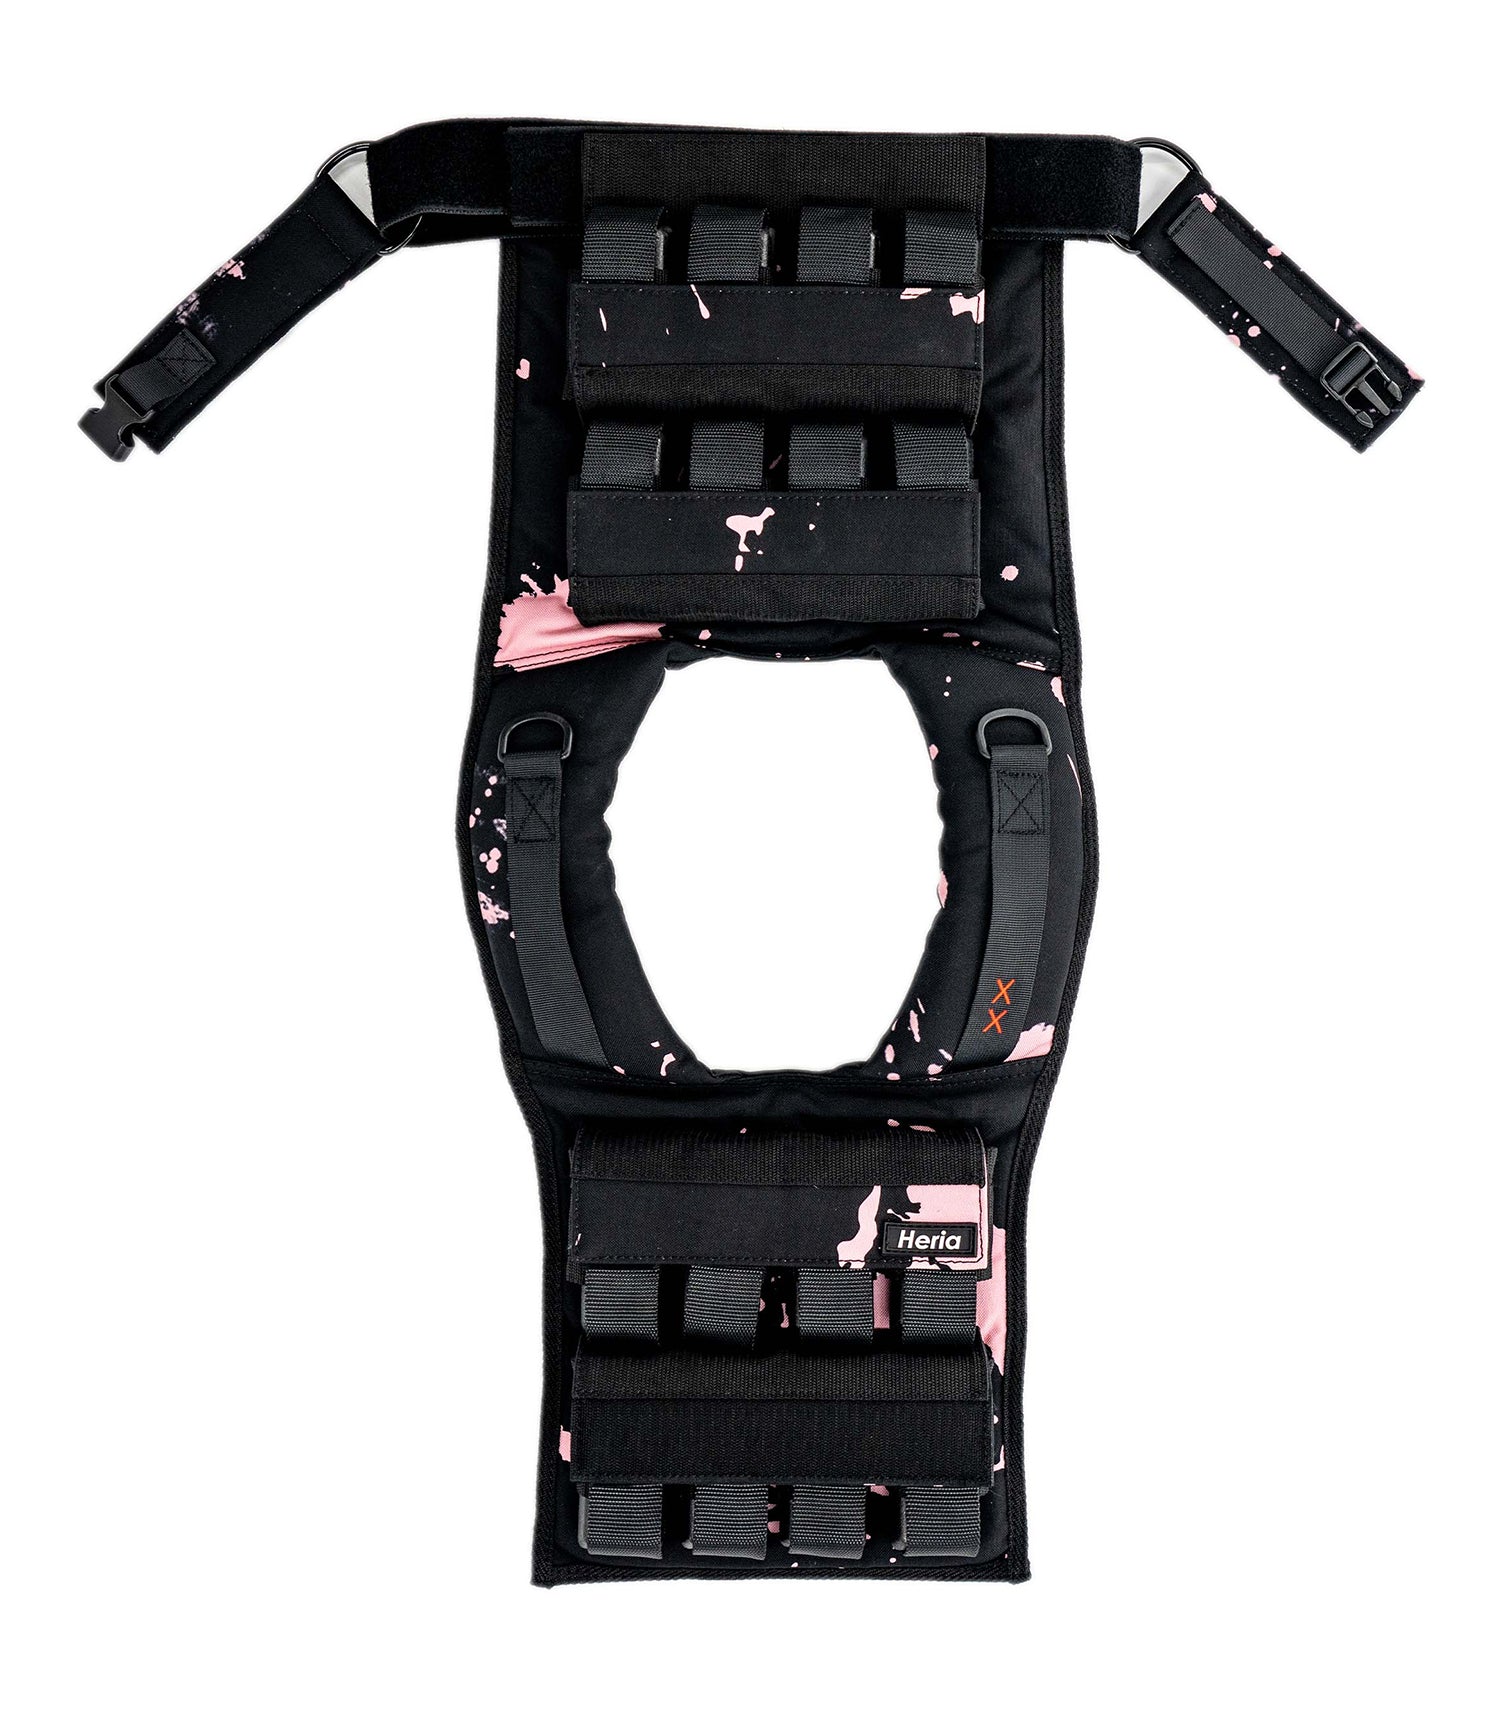 35LB Weight Vest - Black/Pink (6660424663082)